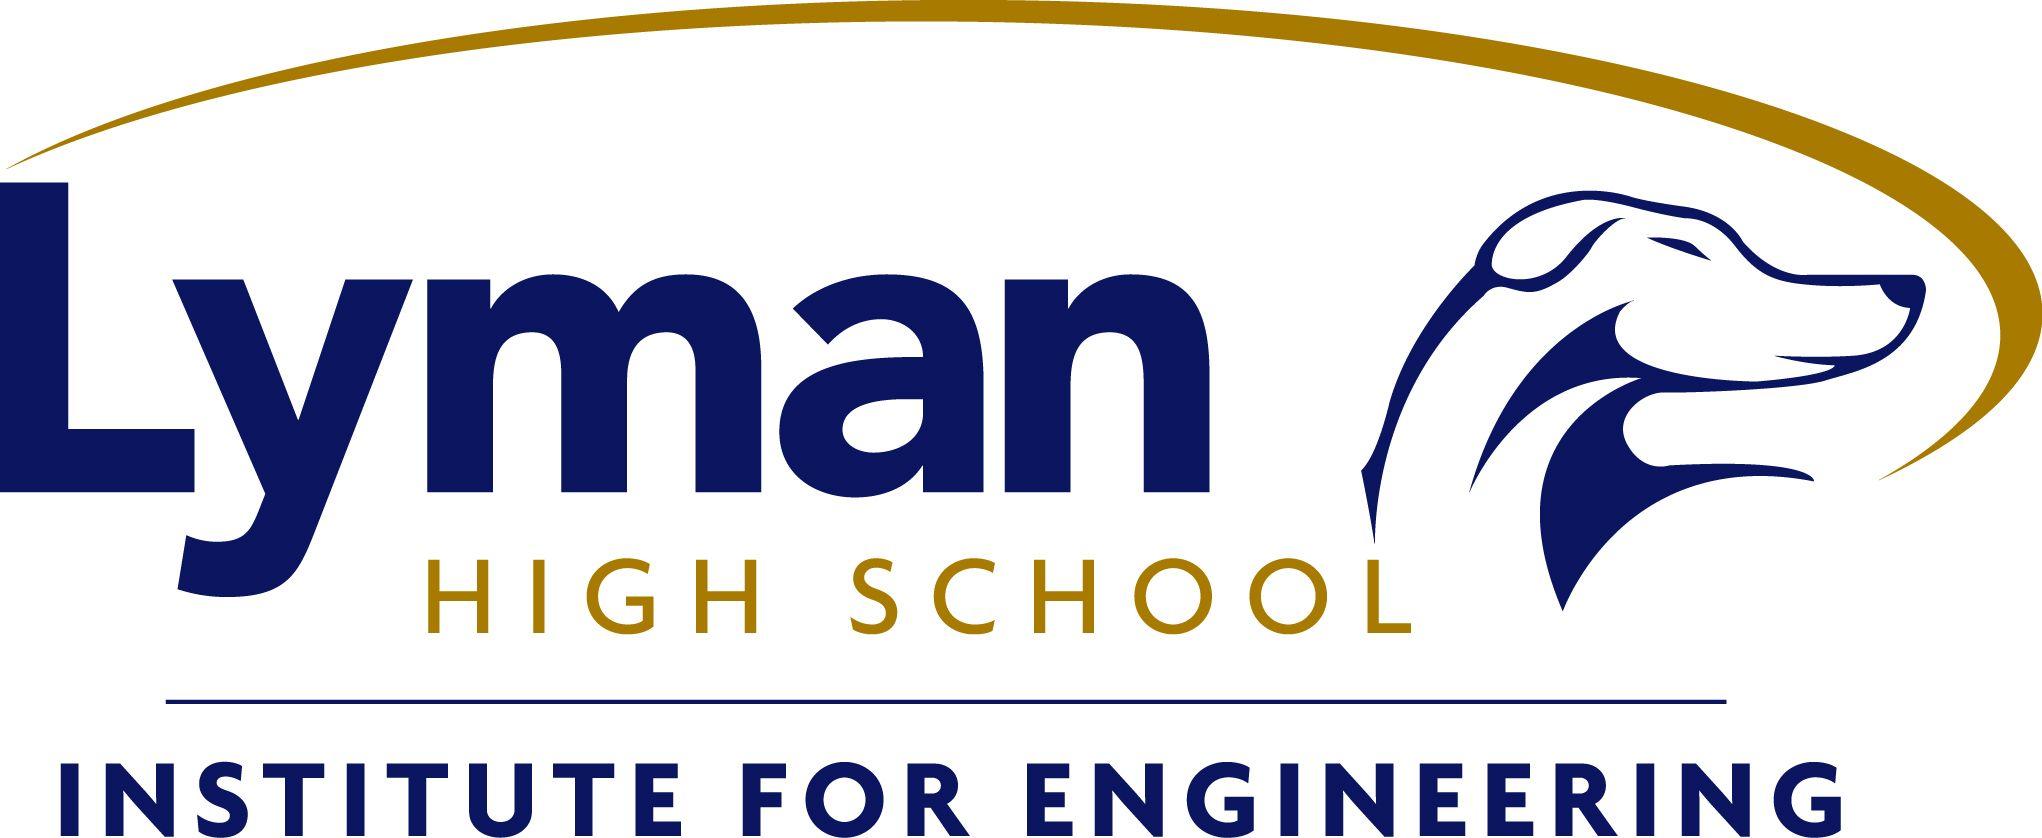 Lyman Logo - South Seminole Academy of Leadership, Law & Advanced Studies ...